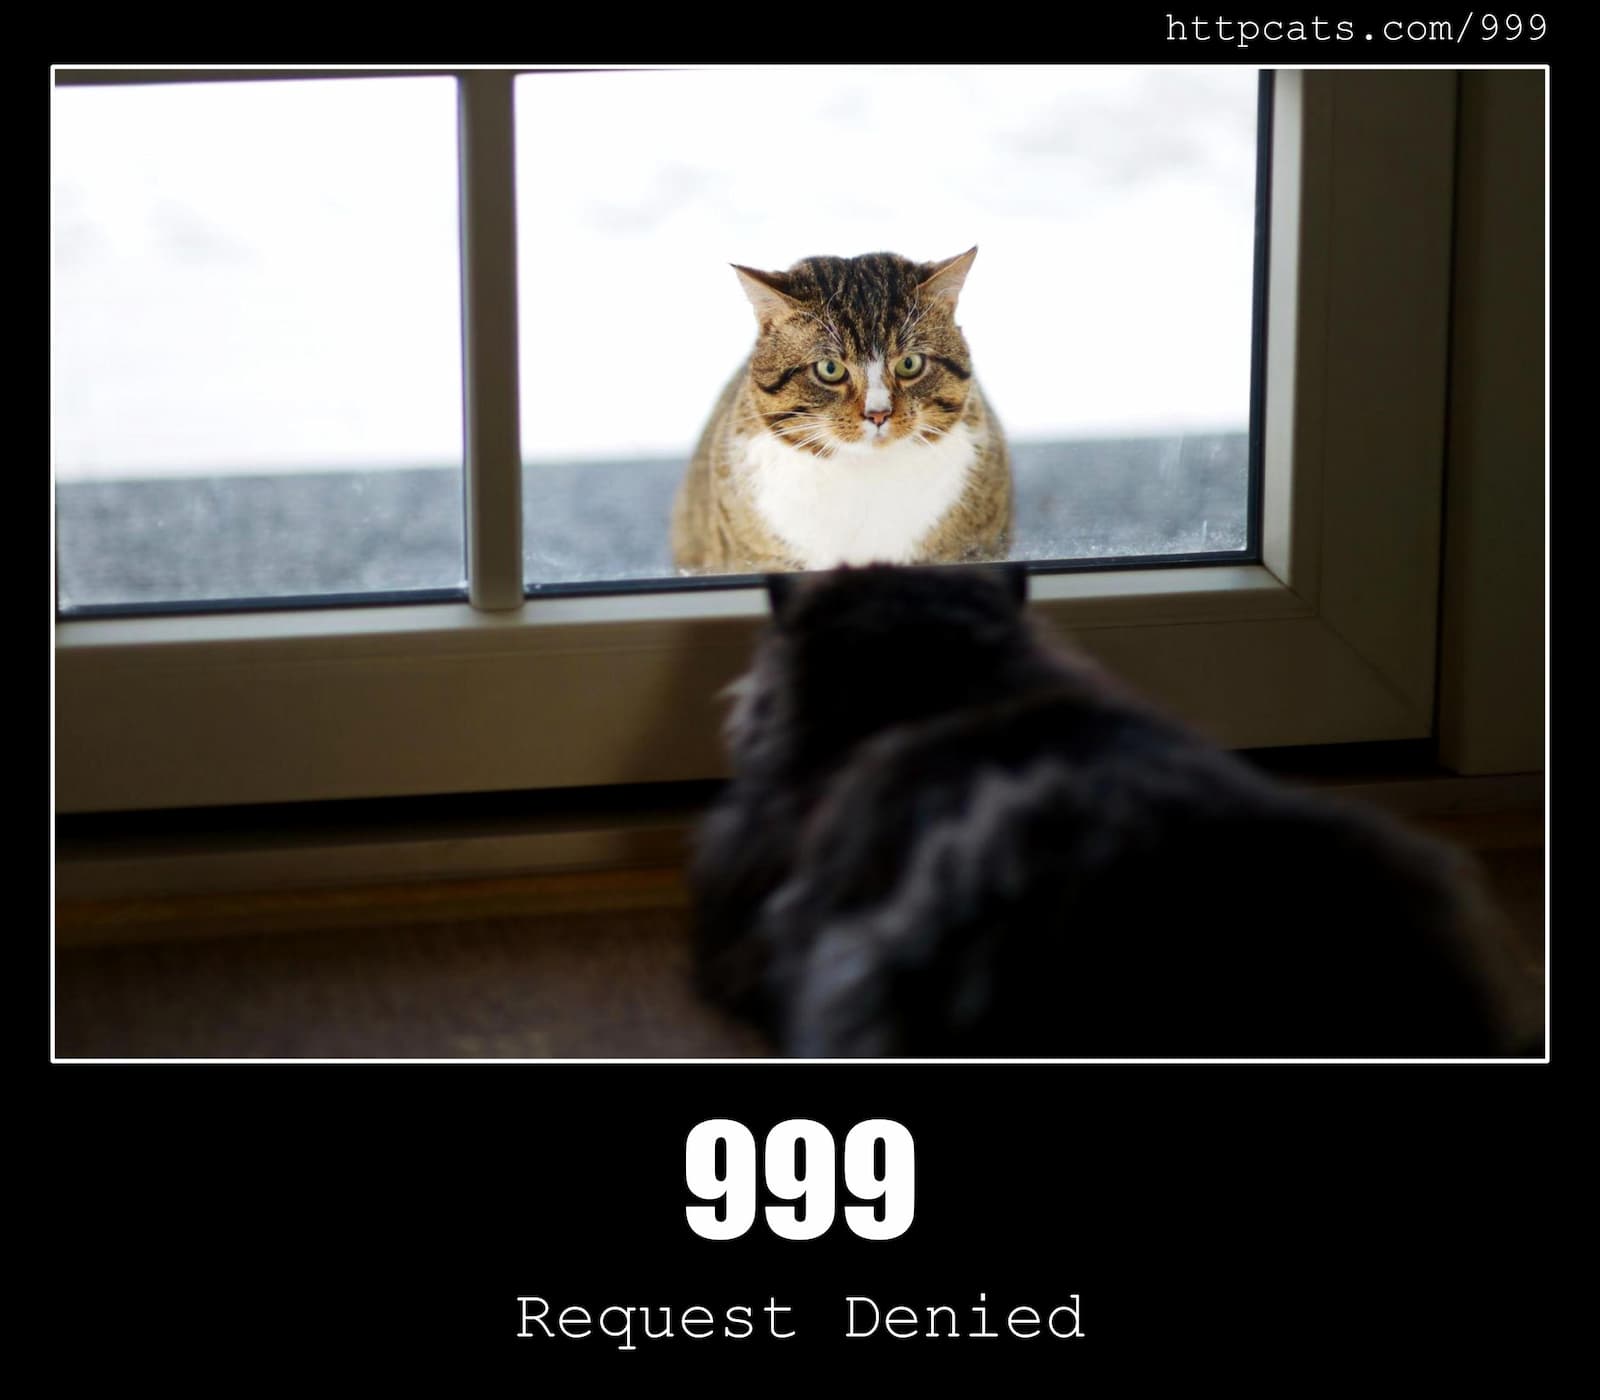 HTTP Status Code 999 Request Denied